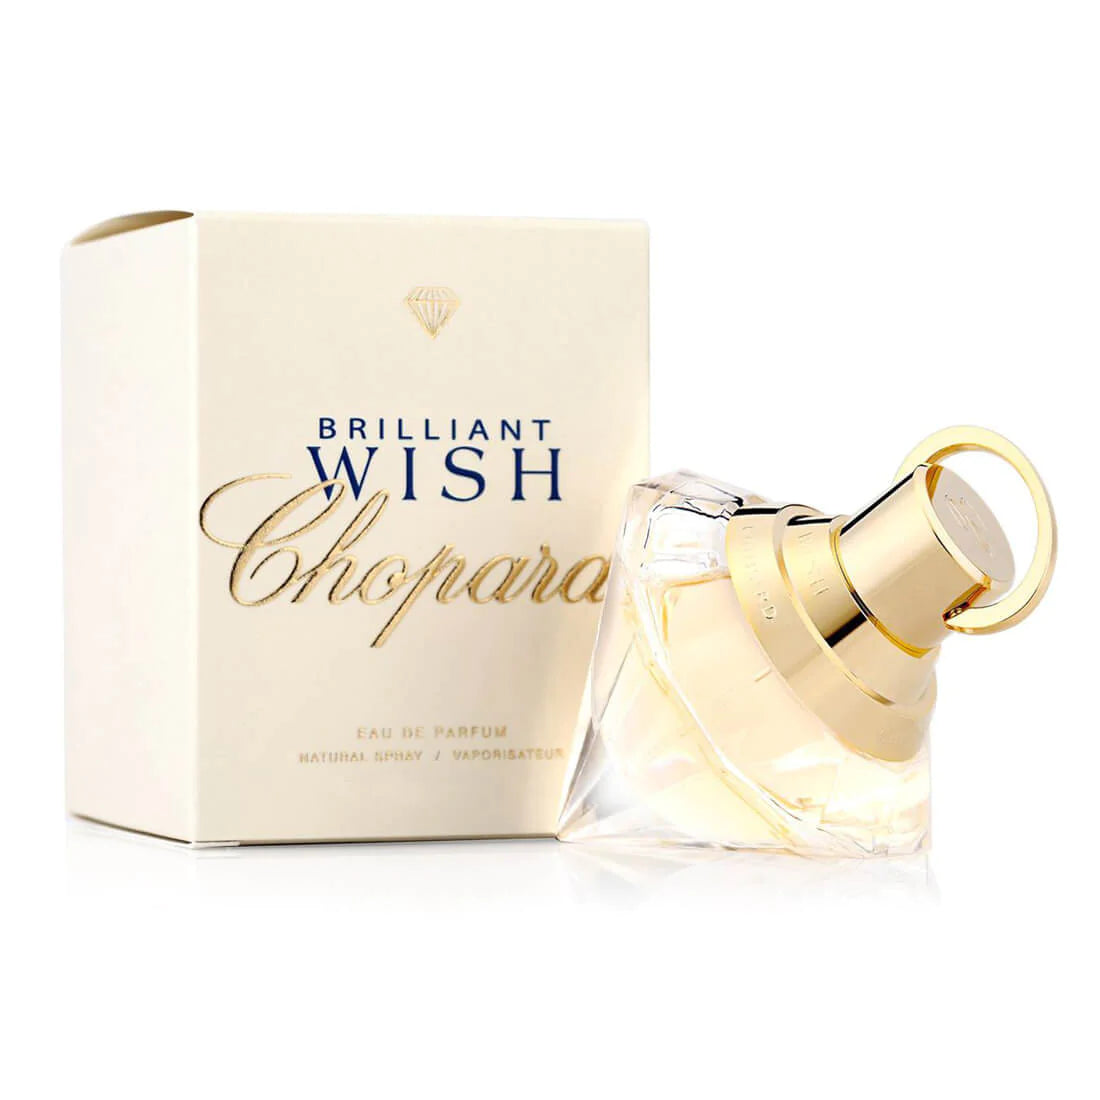 For Brilliant Perfume Eau – Just - Chopard Attar De Women 75ml Wish